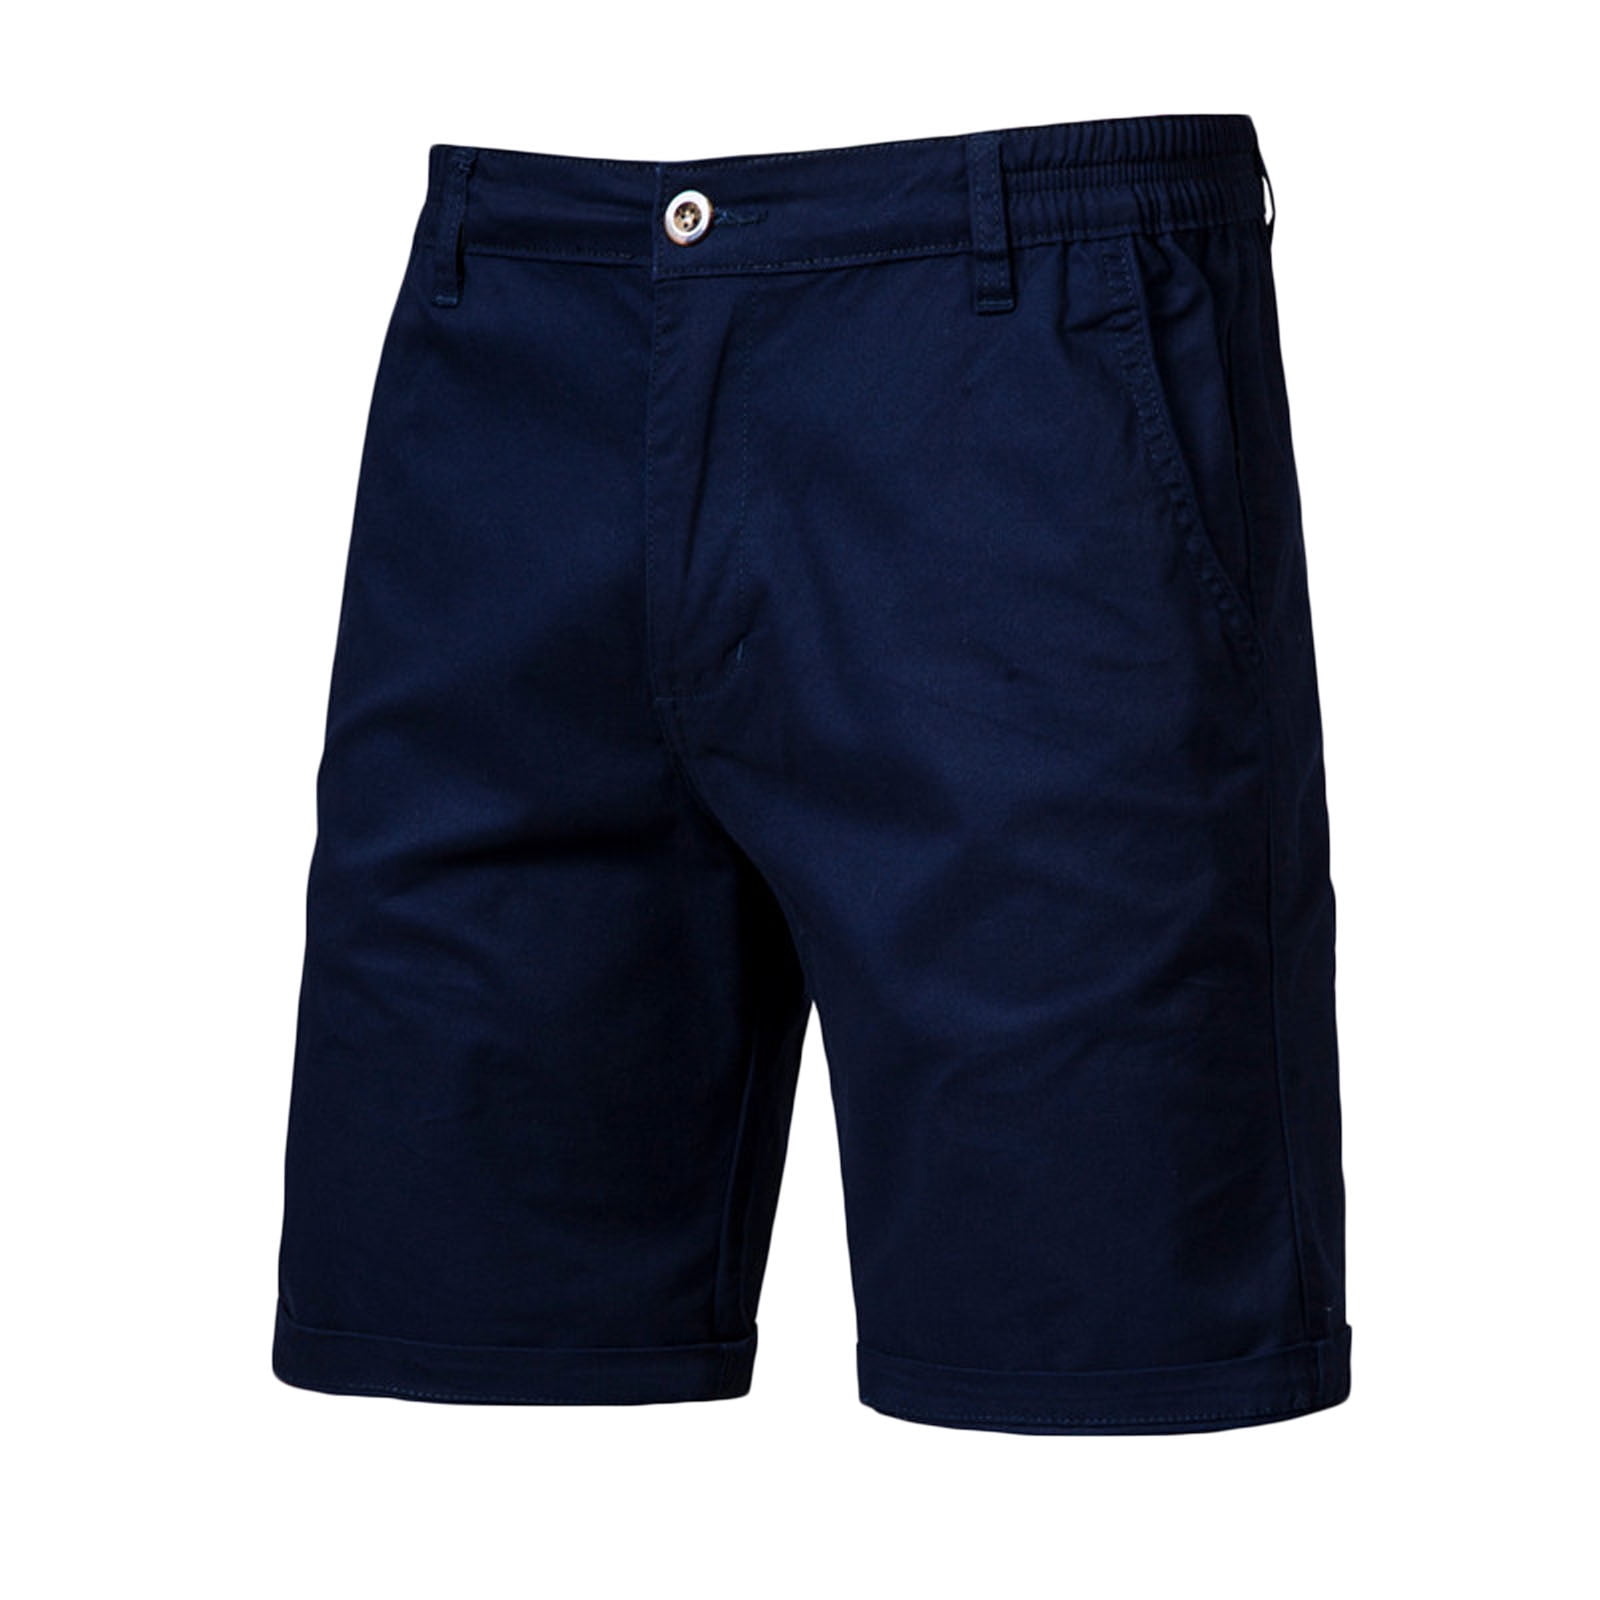 YoungLA shorts - Shorts